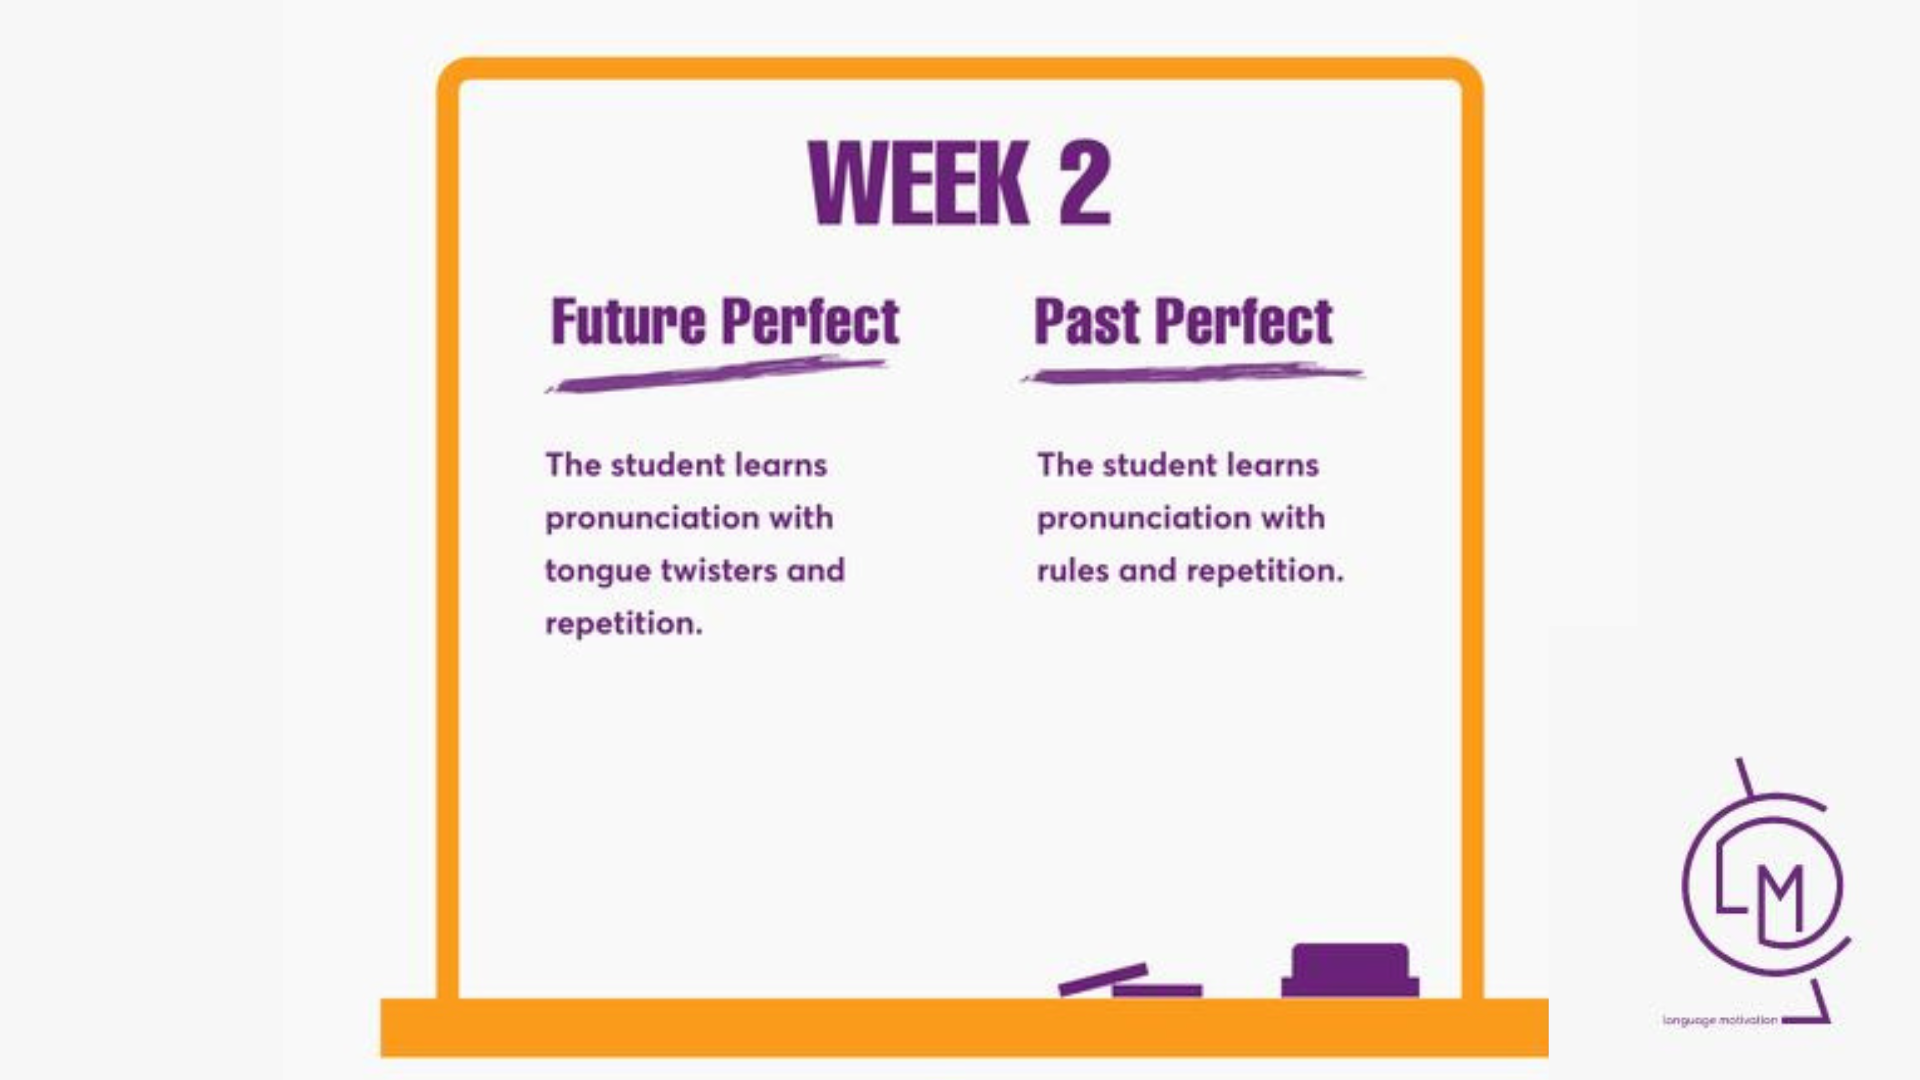 Future Perfect vs Past Perfect -> Week 2